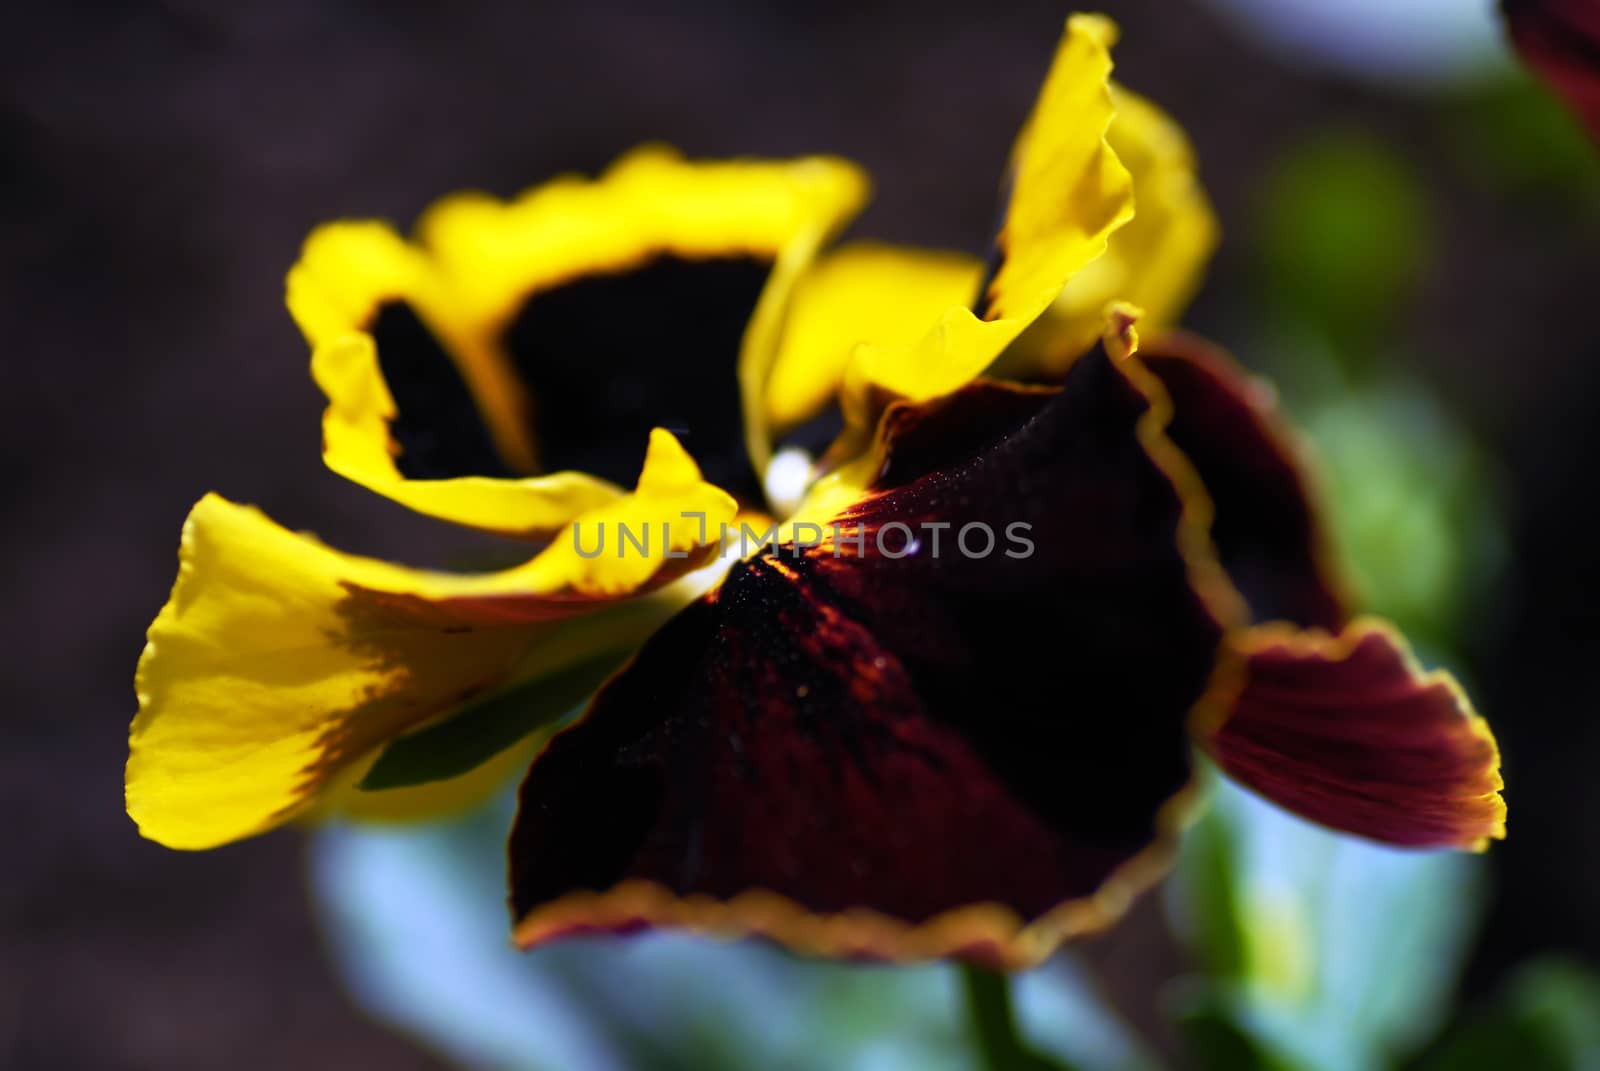 Viola tricolor plant by simply